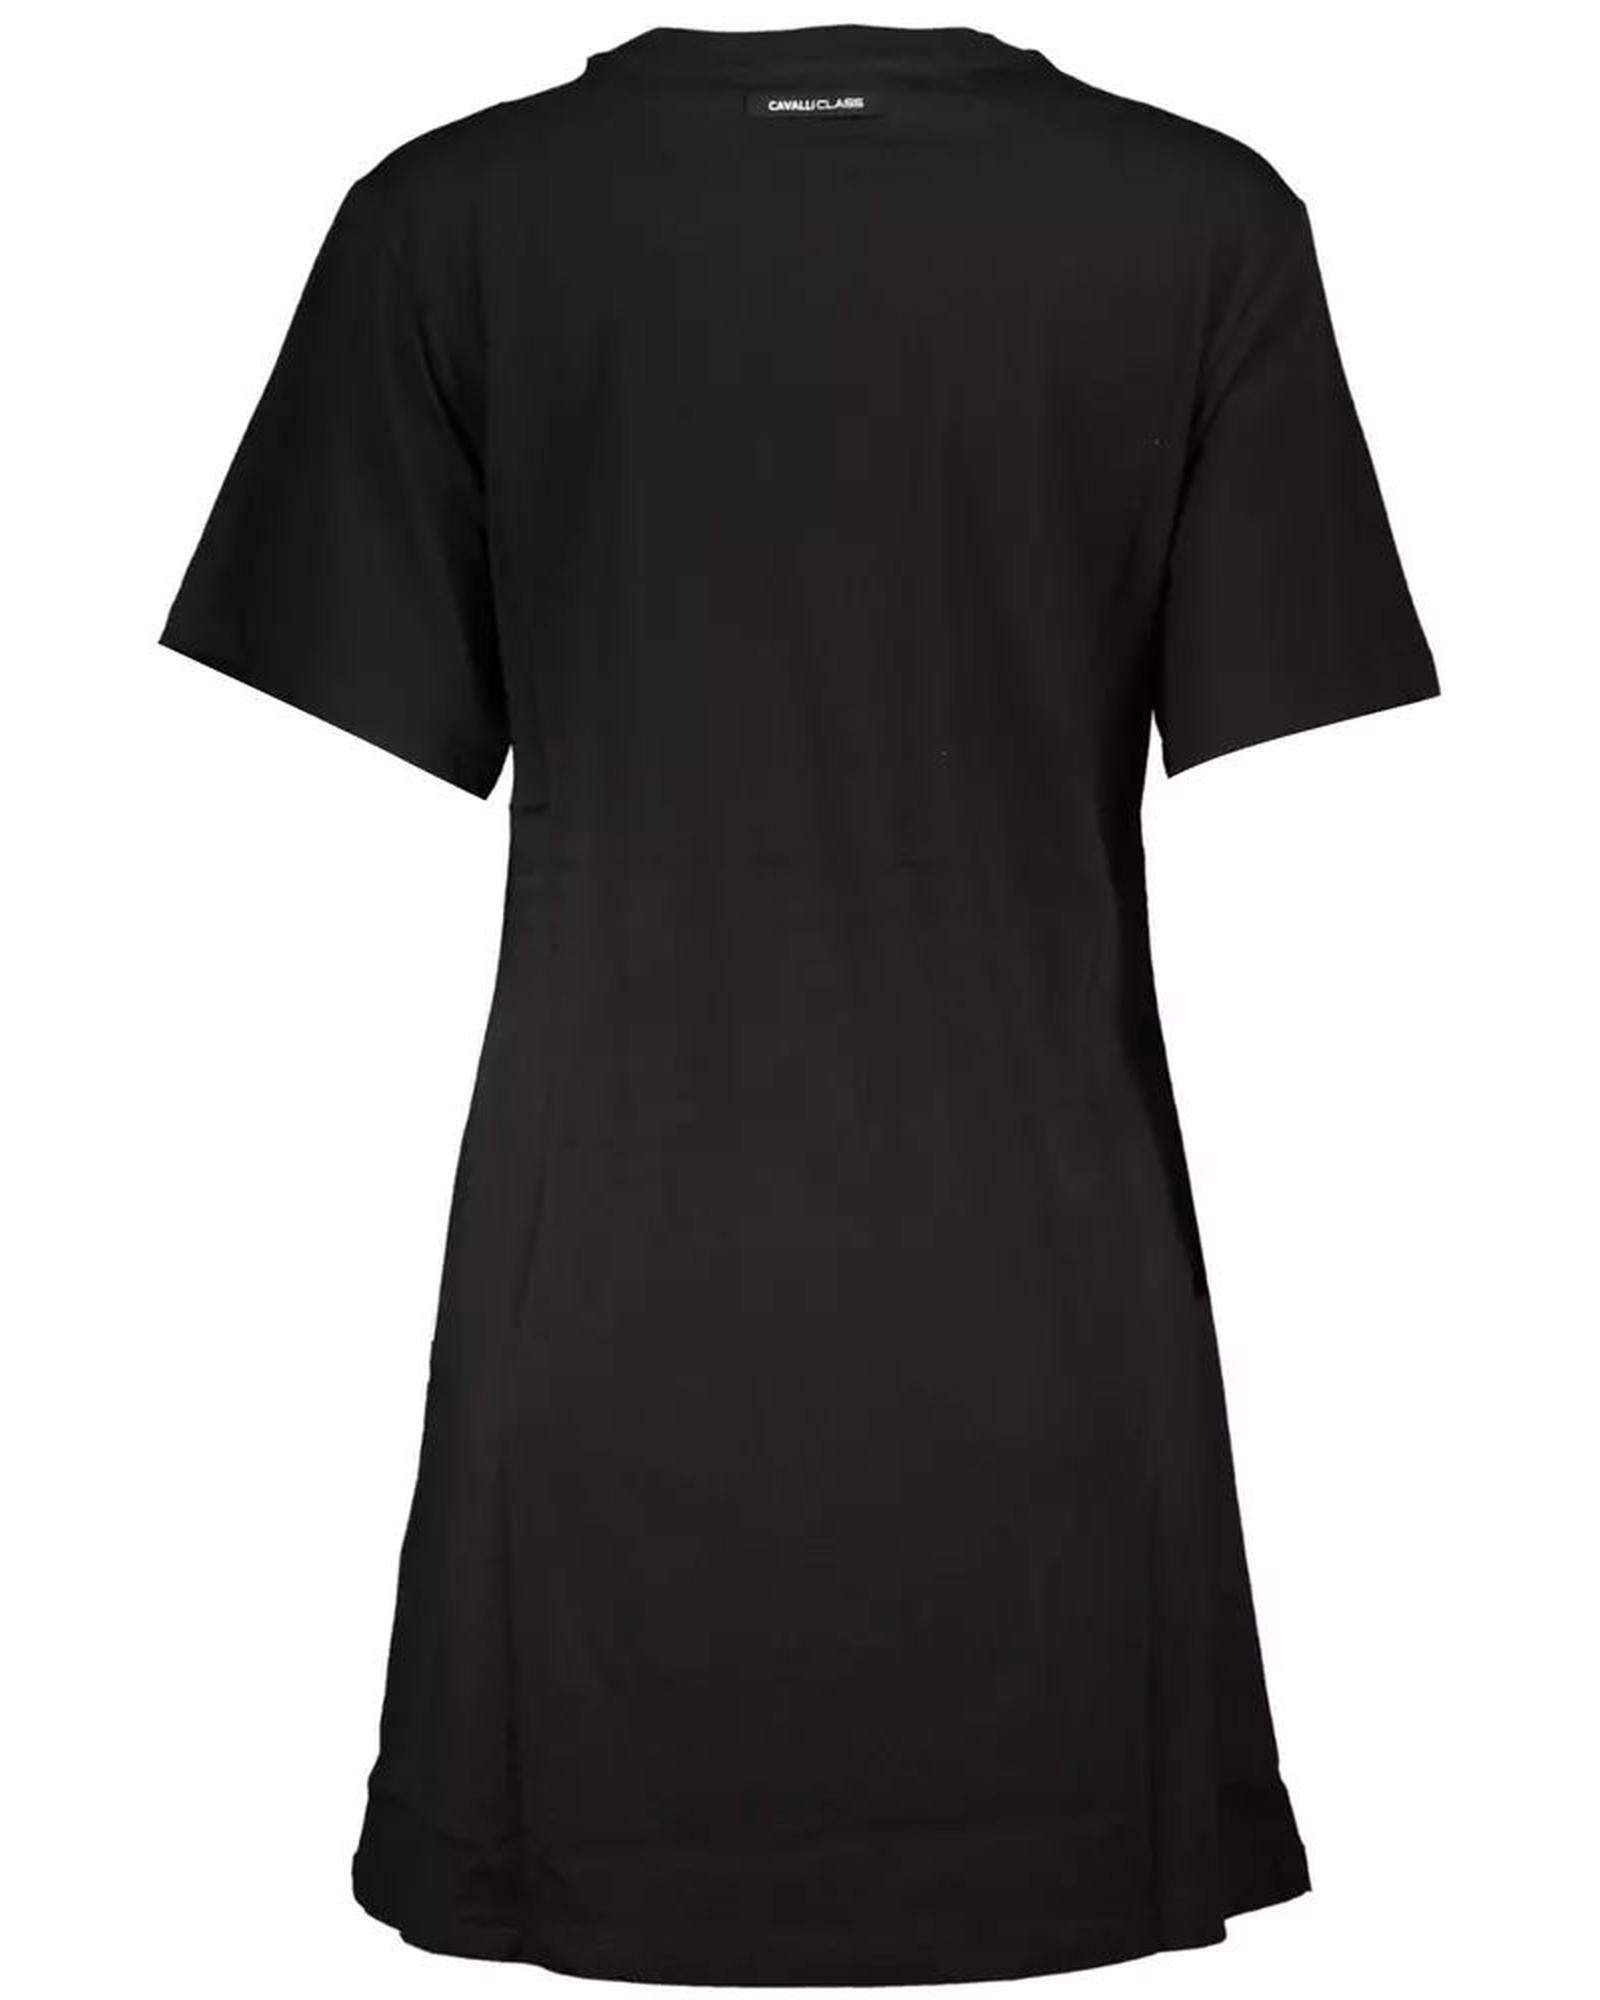 Women's Black Cotton Dress - M